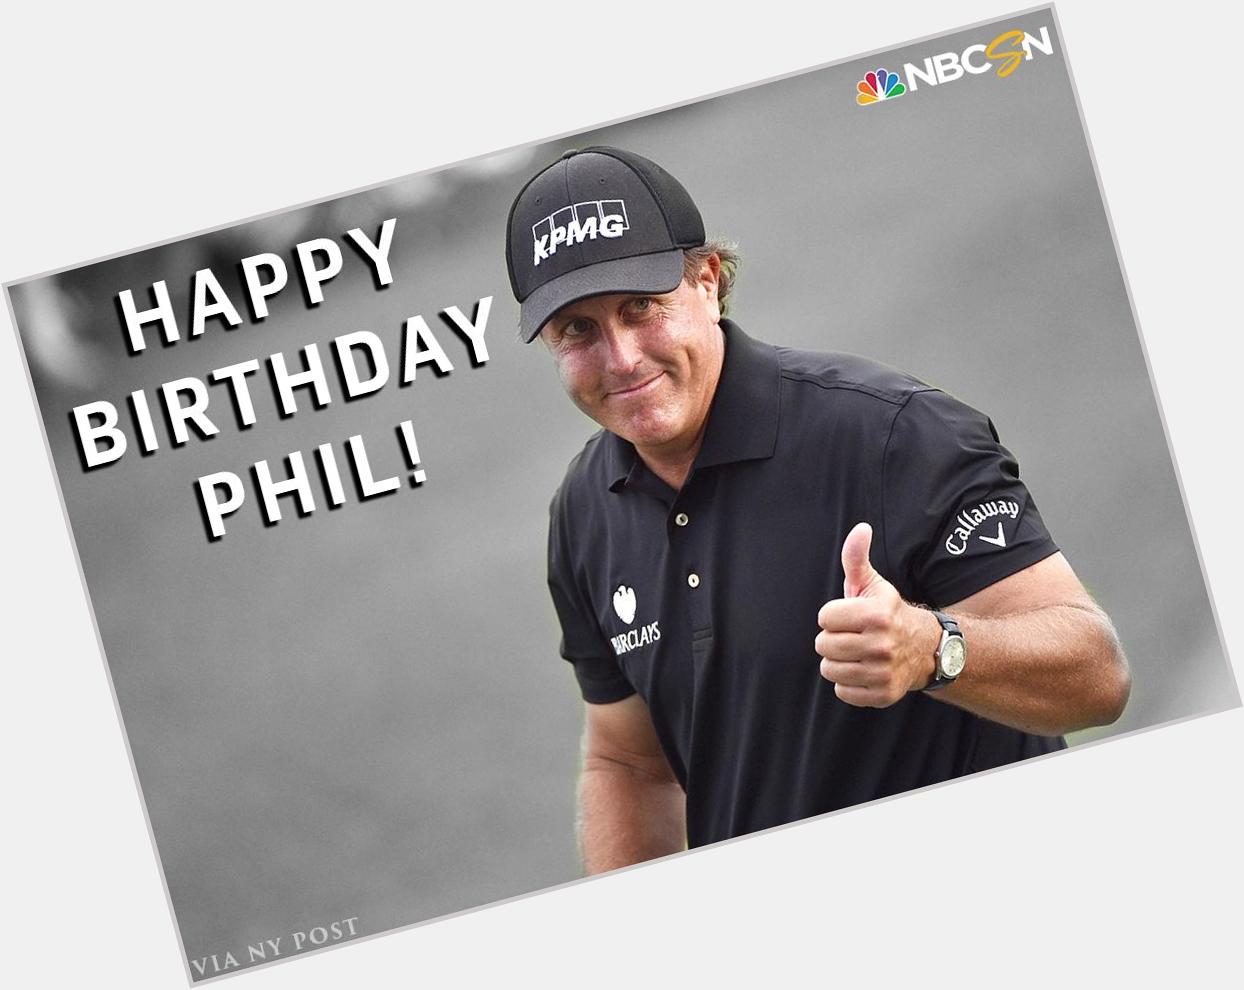 Happy Birthday Phil Mickelson!  